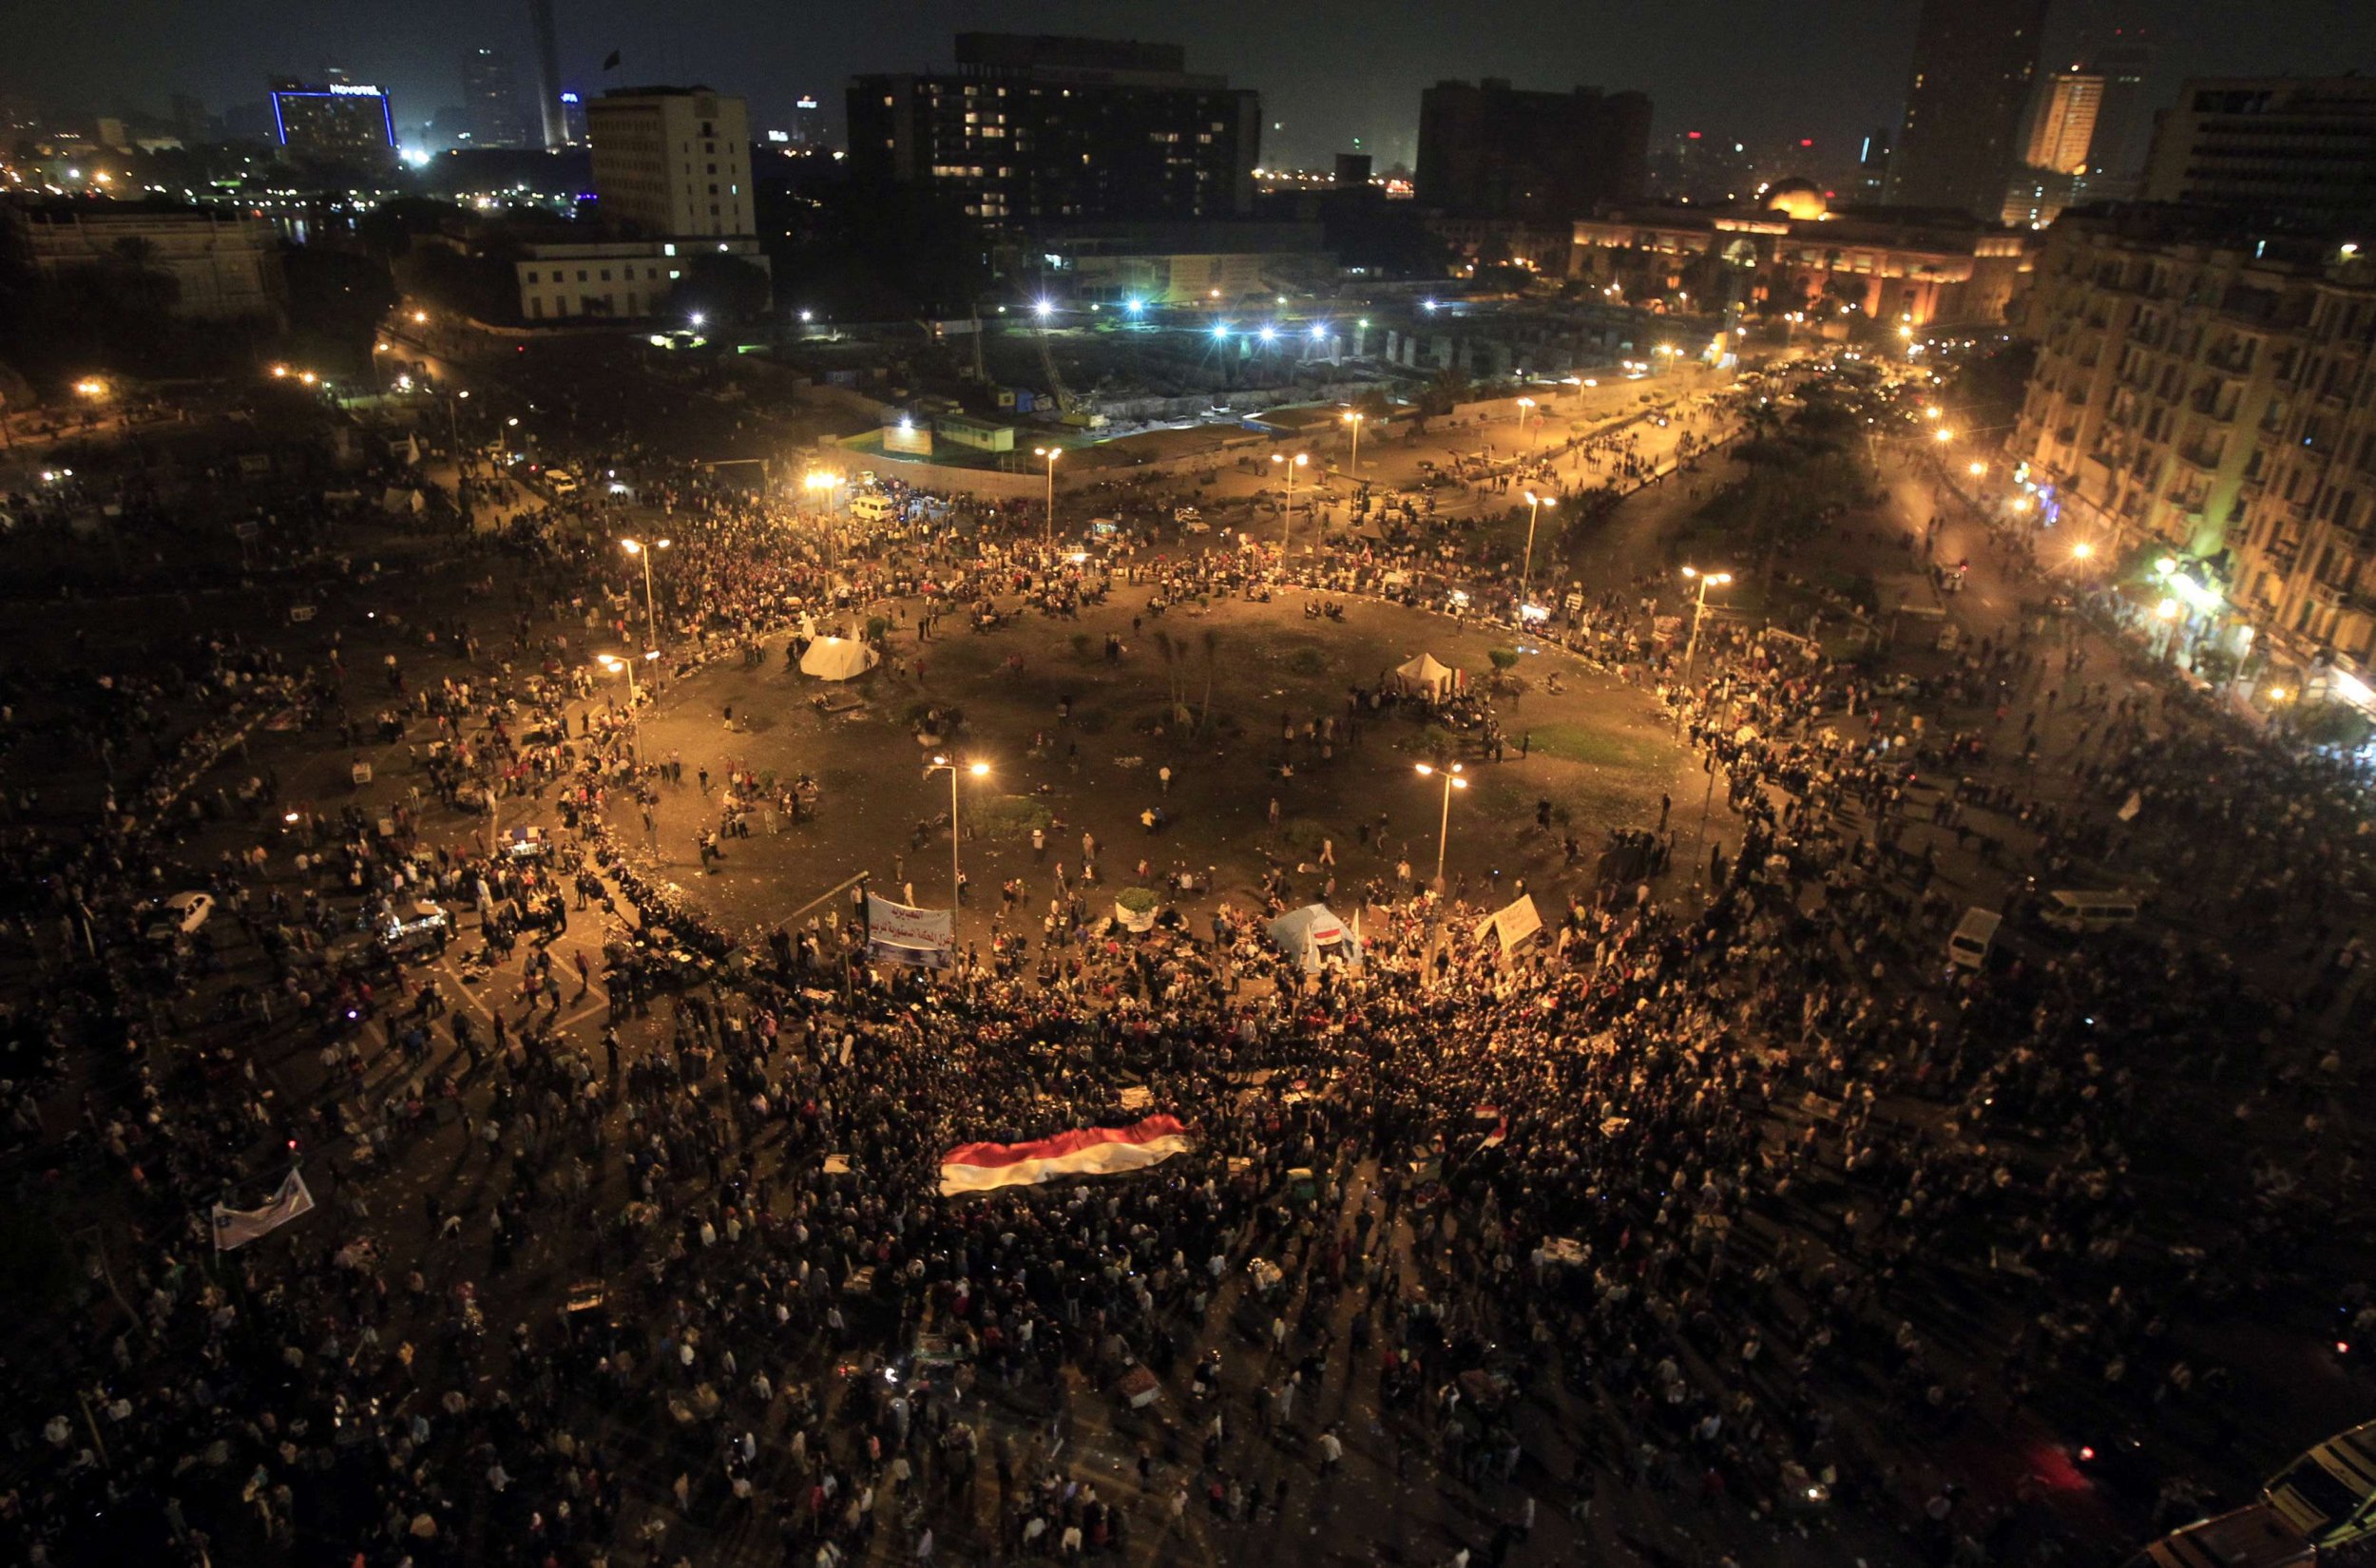 Cairos Tahrir Square 2